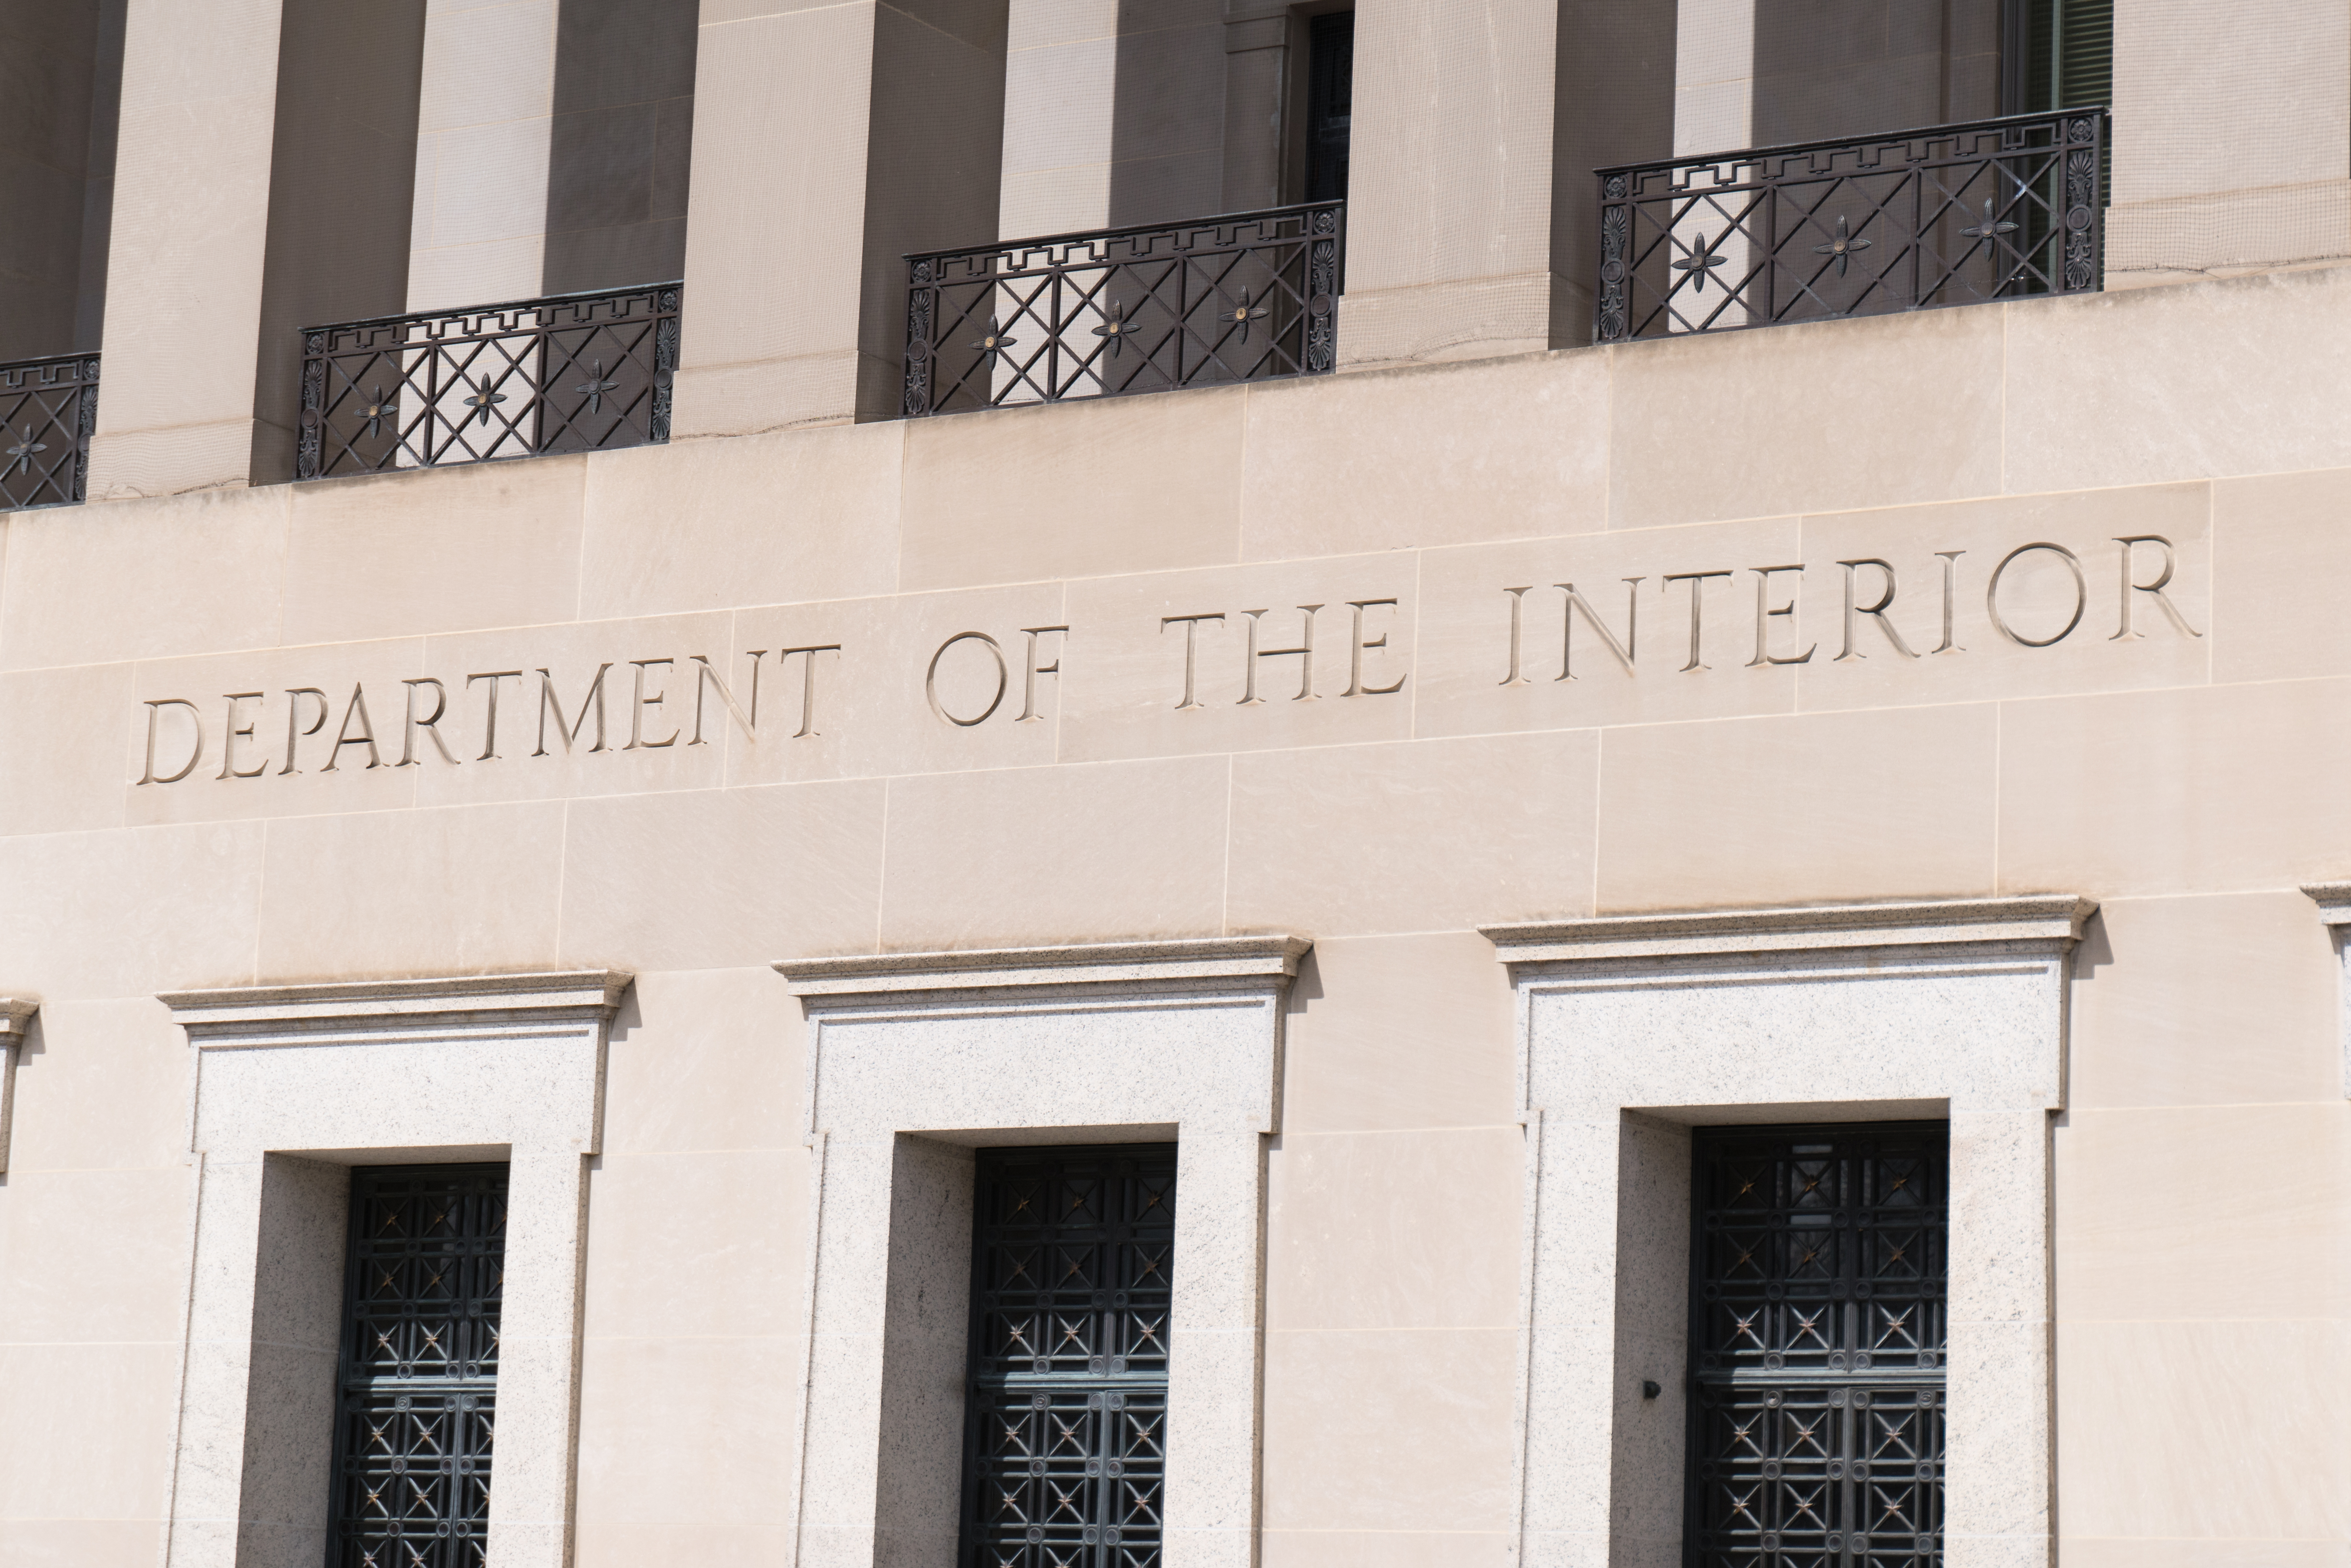 Facade of Department of the Interior Building in Washington DC